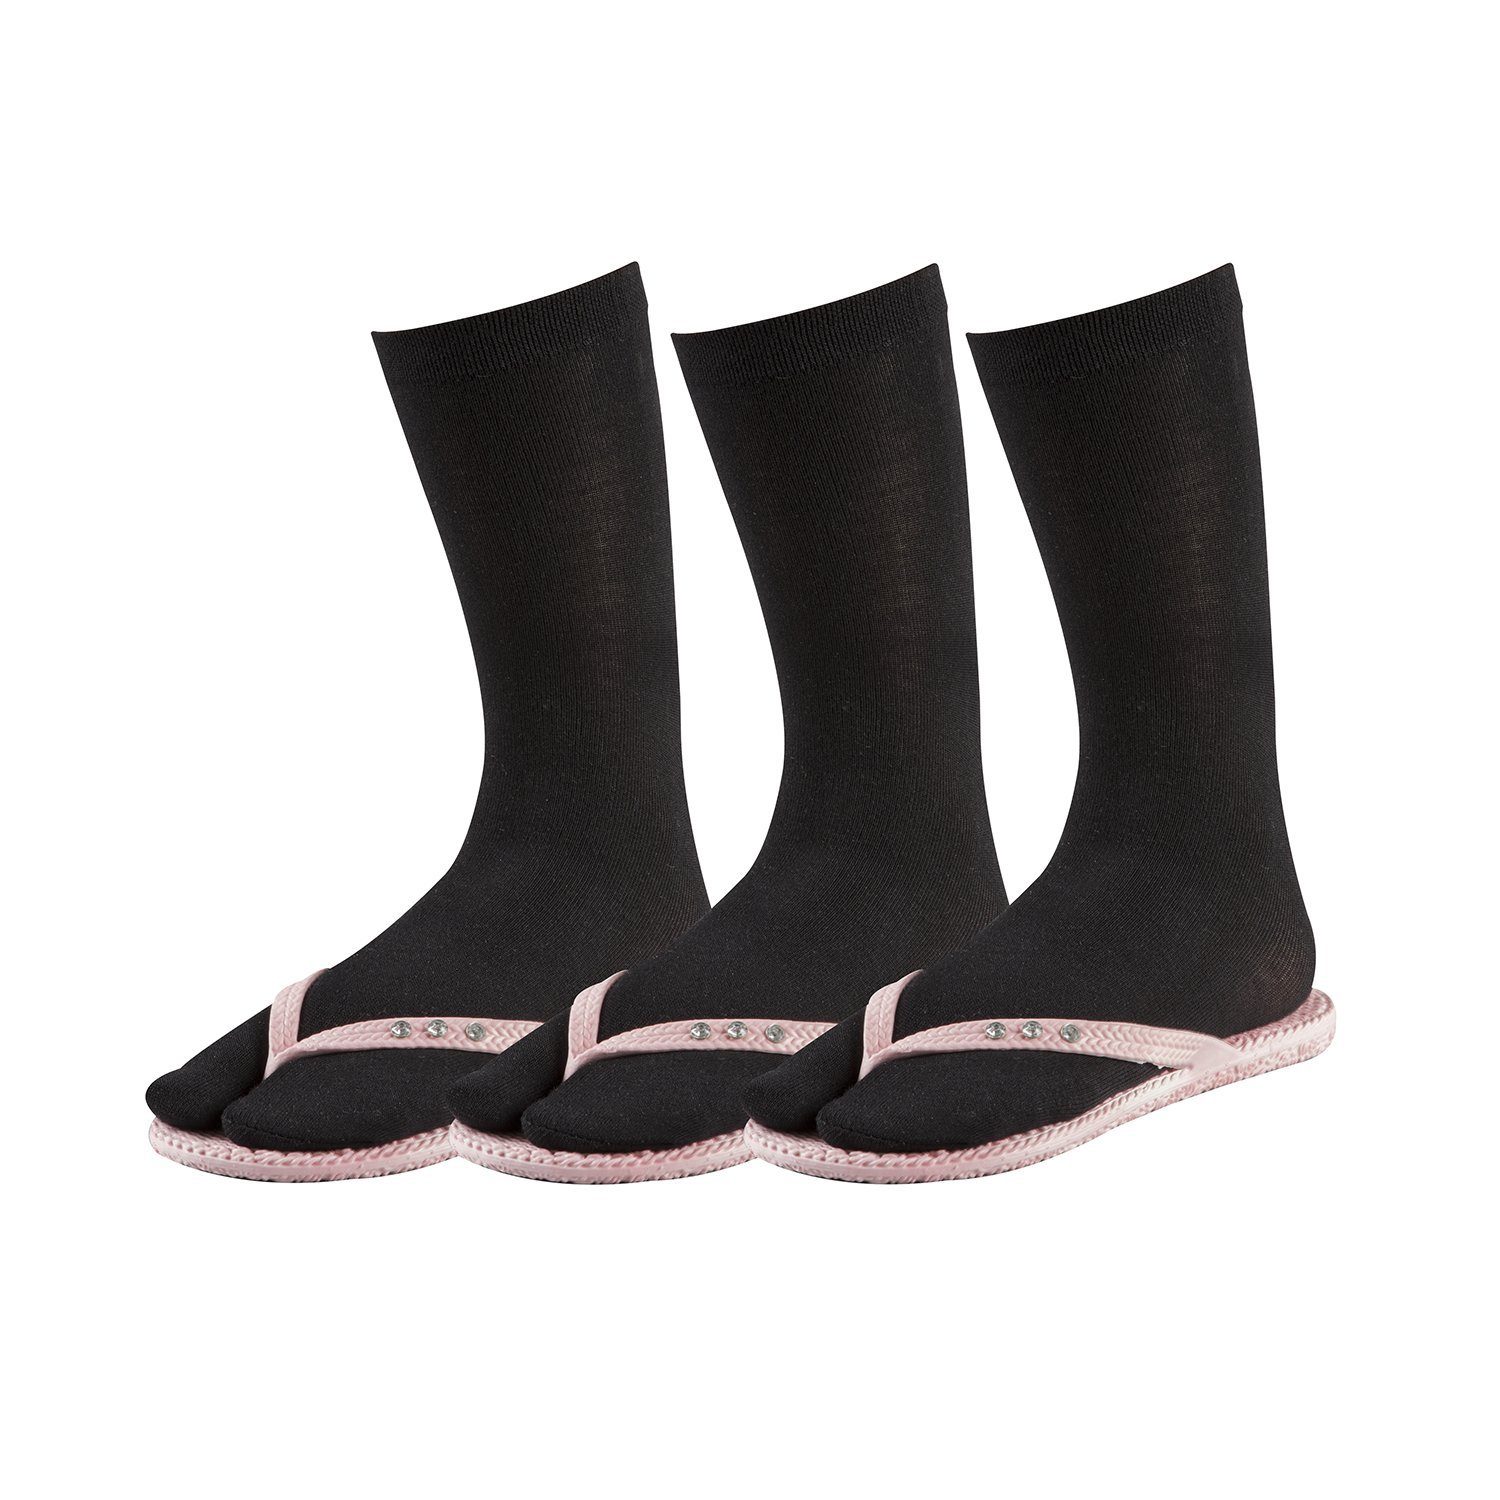 Zwei-Zehen-Socken, 3 Sandalen-Socken, Socken Tabi Zehensocken Schwarz Bambussocken, FussFreunde Paar